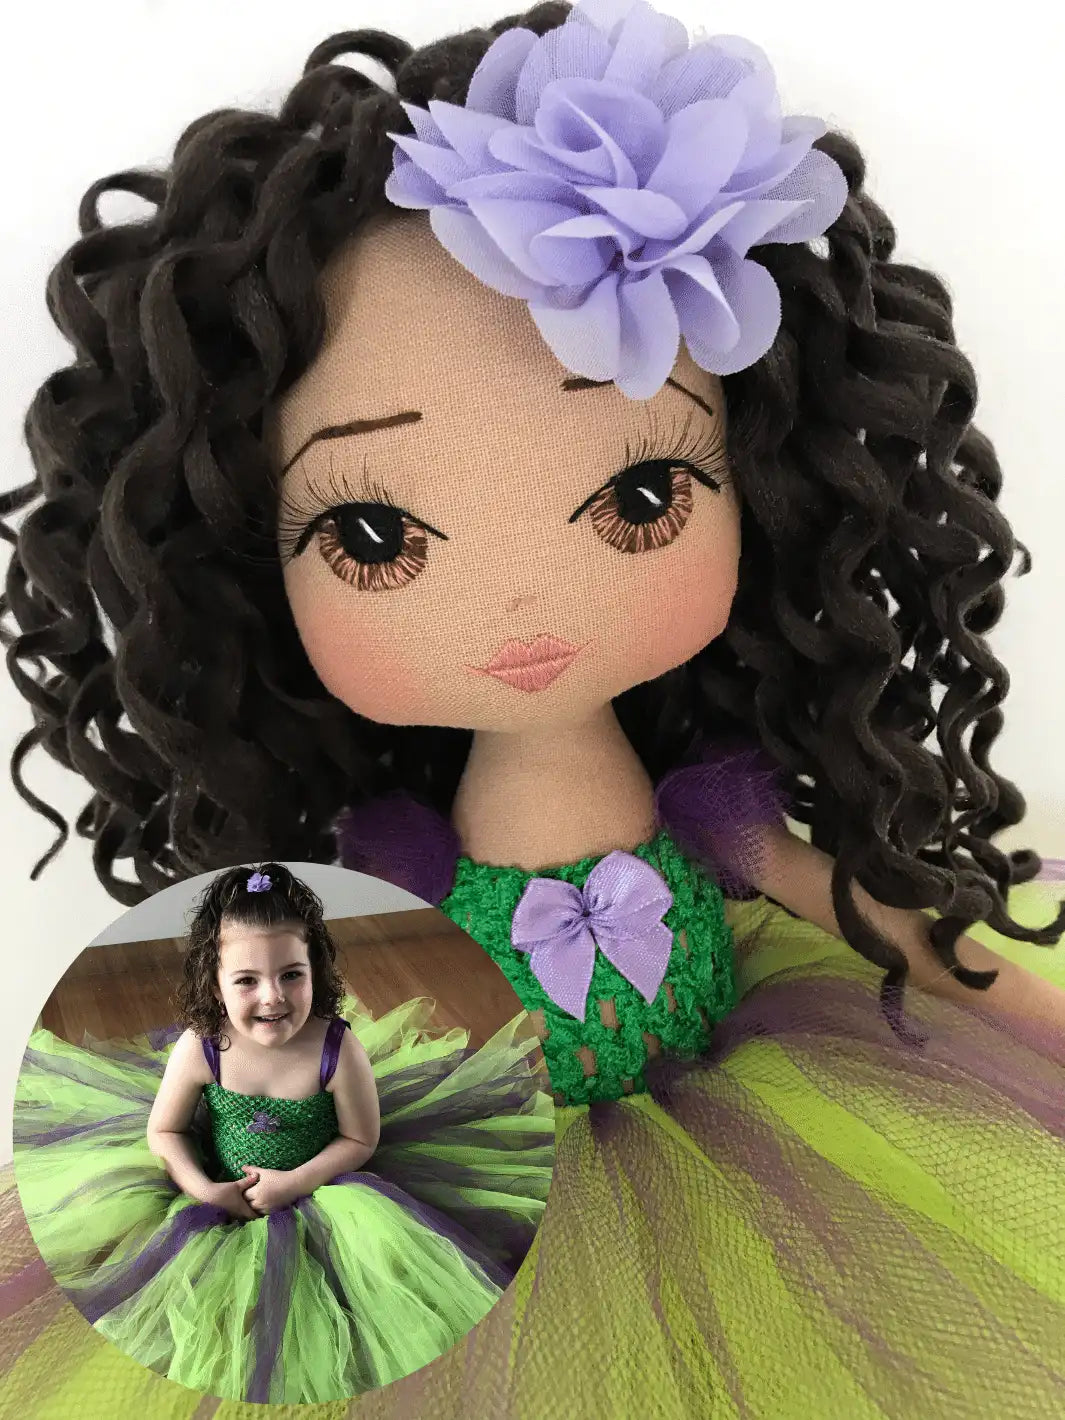 Upper Dhali personalised handmade keepsake doll with long brown curls dressed in a green and purple tutu dress